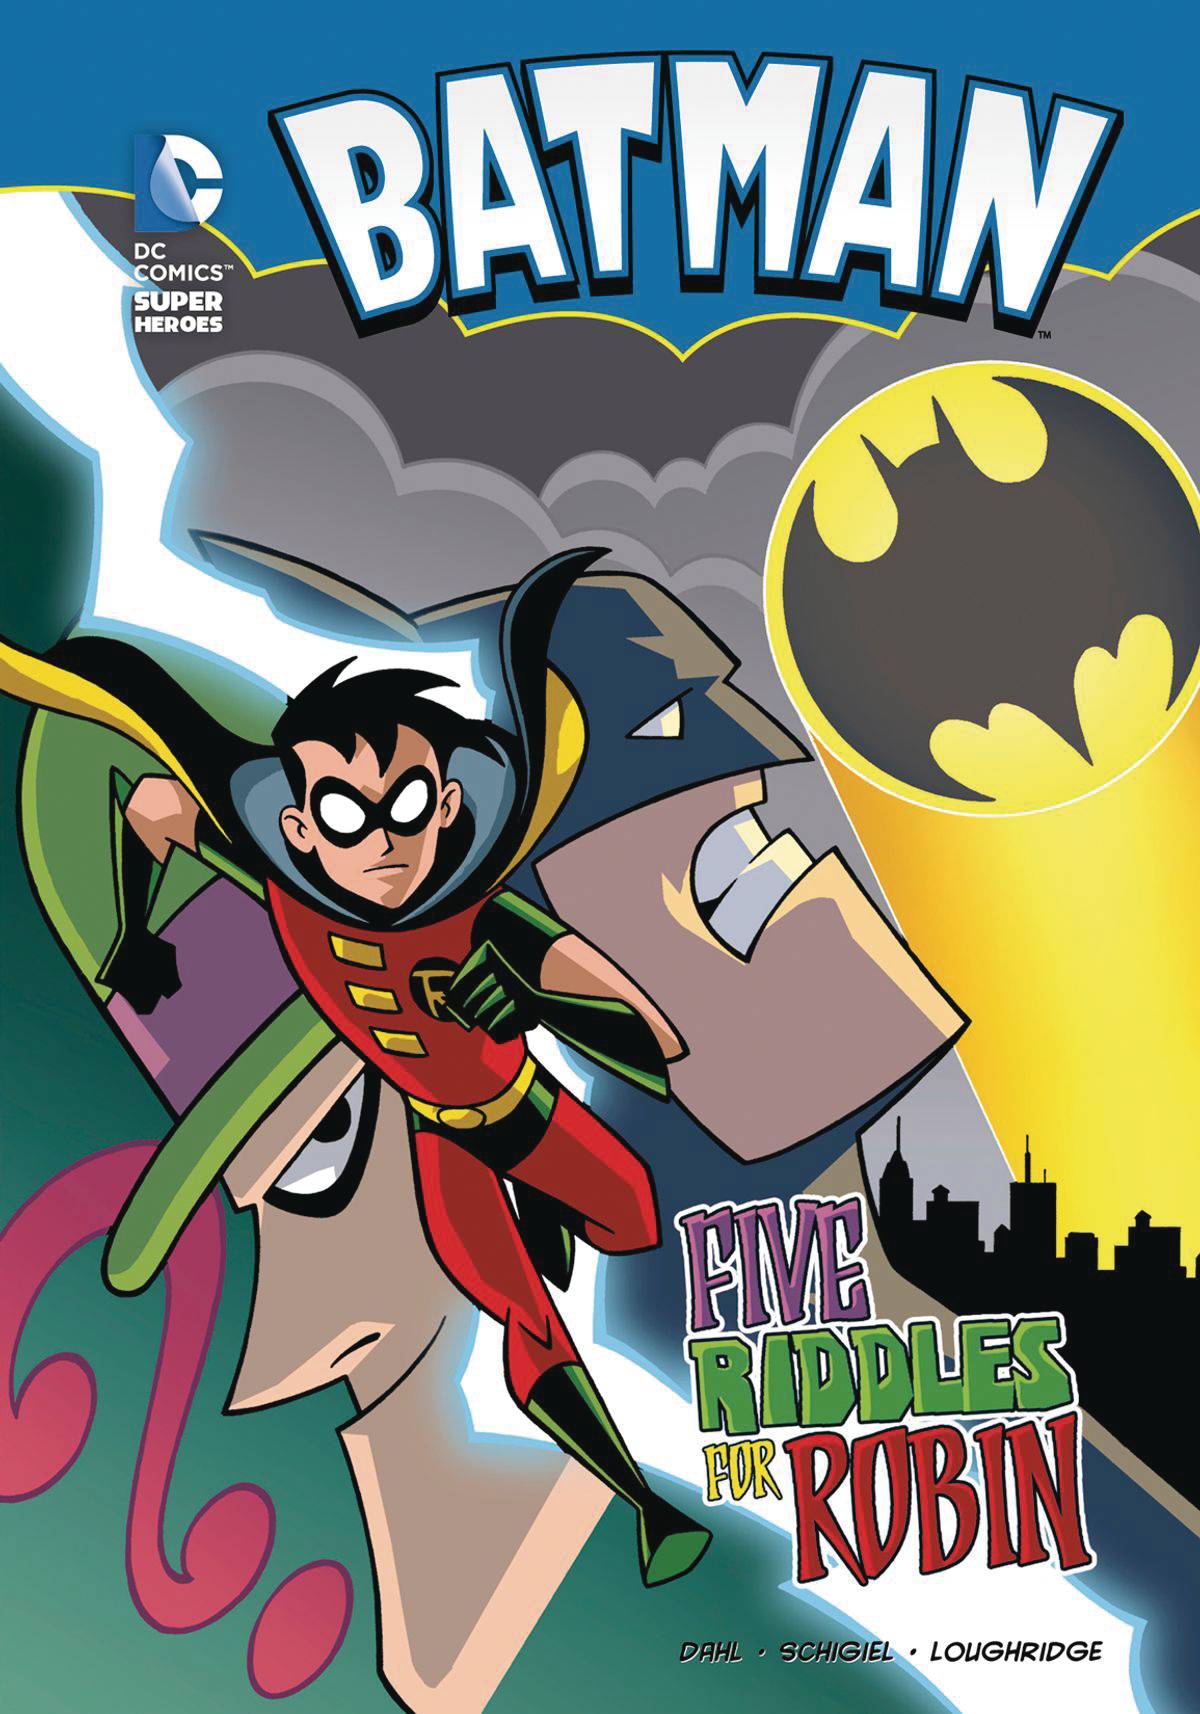 DC Super Heroes Batman Young Reader Graphic Novel #27 Five Riddles For Robin